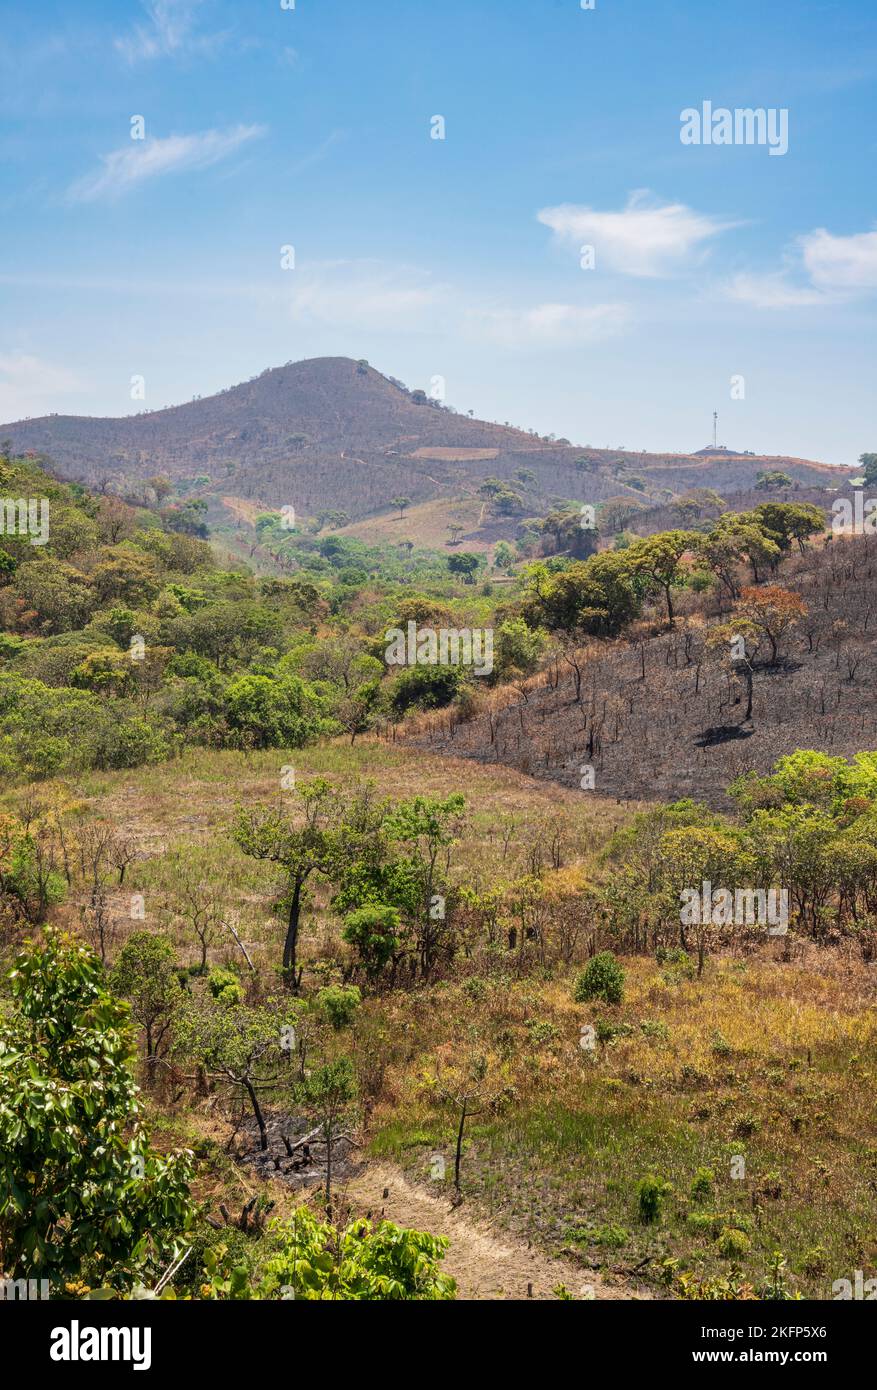 Farming environment showing evidence of wildfire destruction near Bula, Nkhata Bay District, Malawi Stock Photo